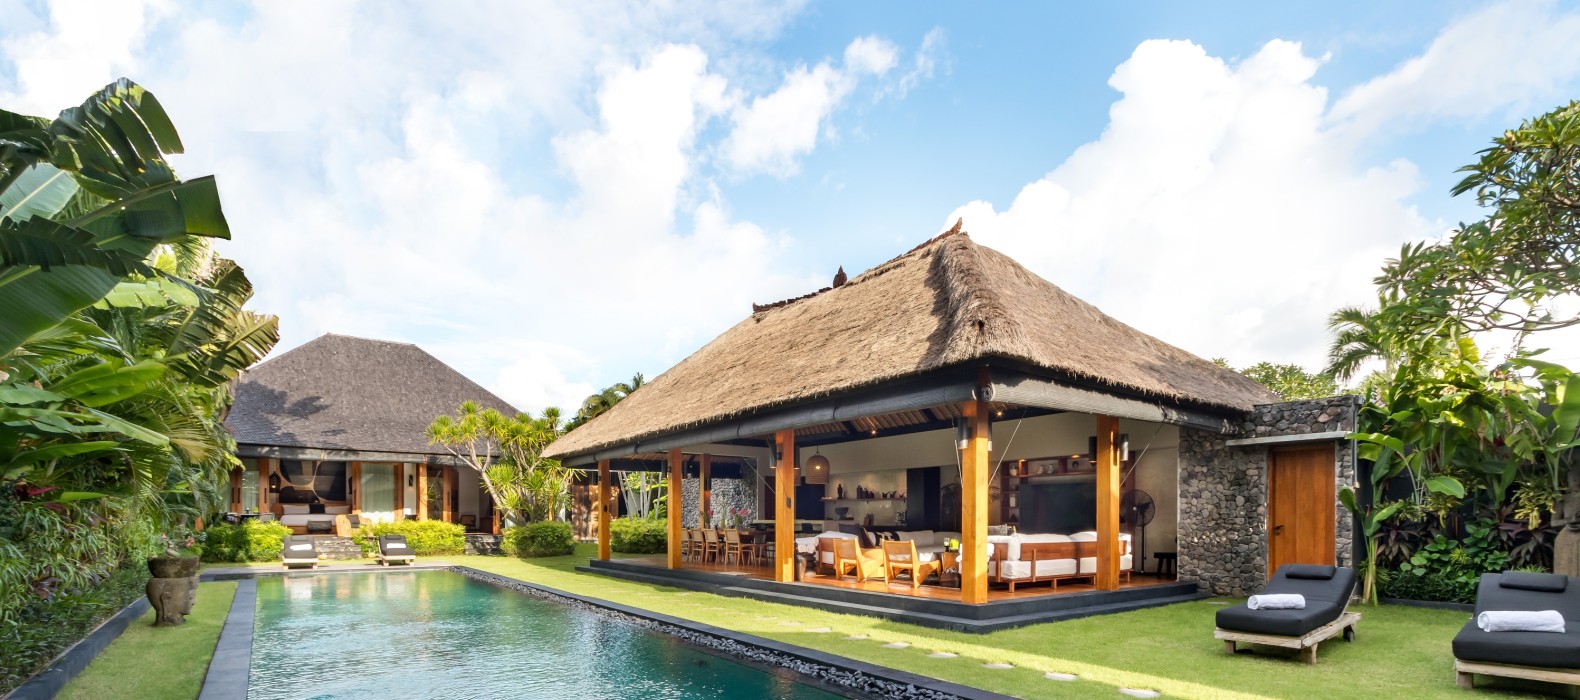 Exterior pool area of Villa Wolfe in Bali